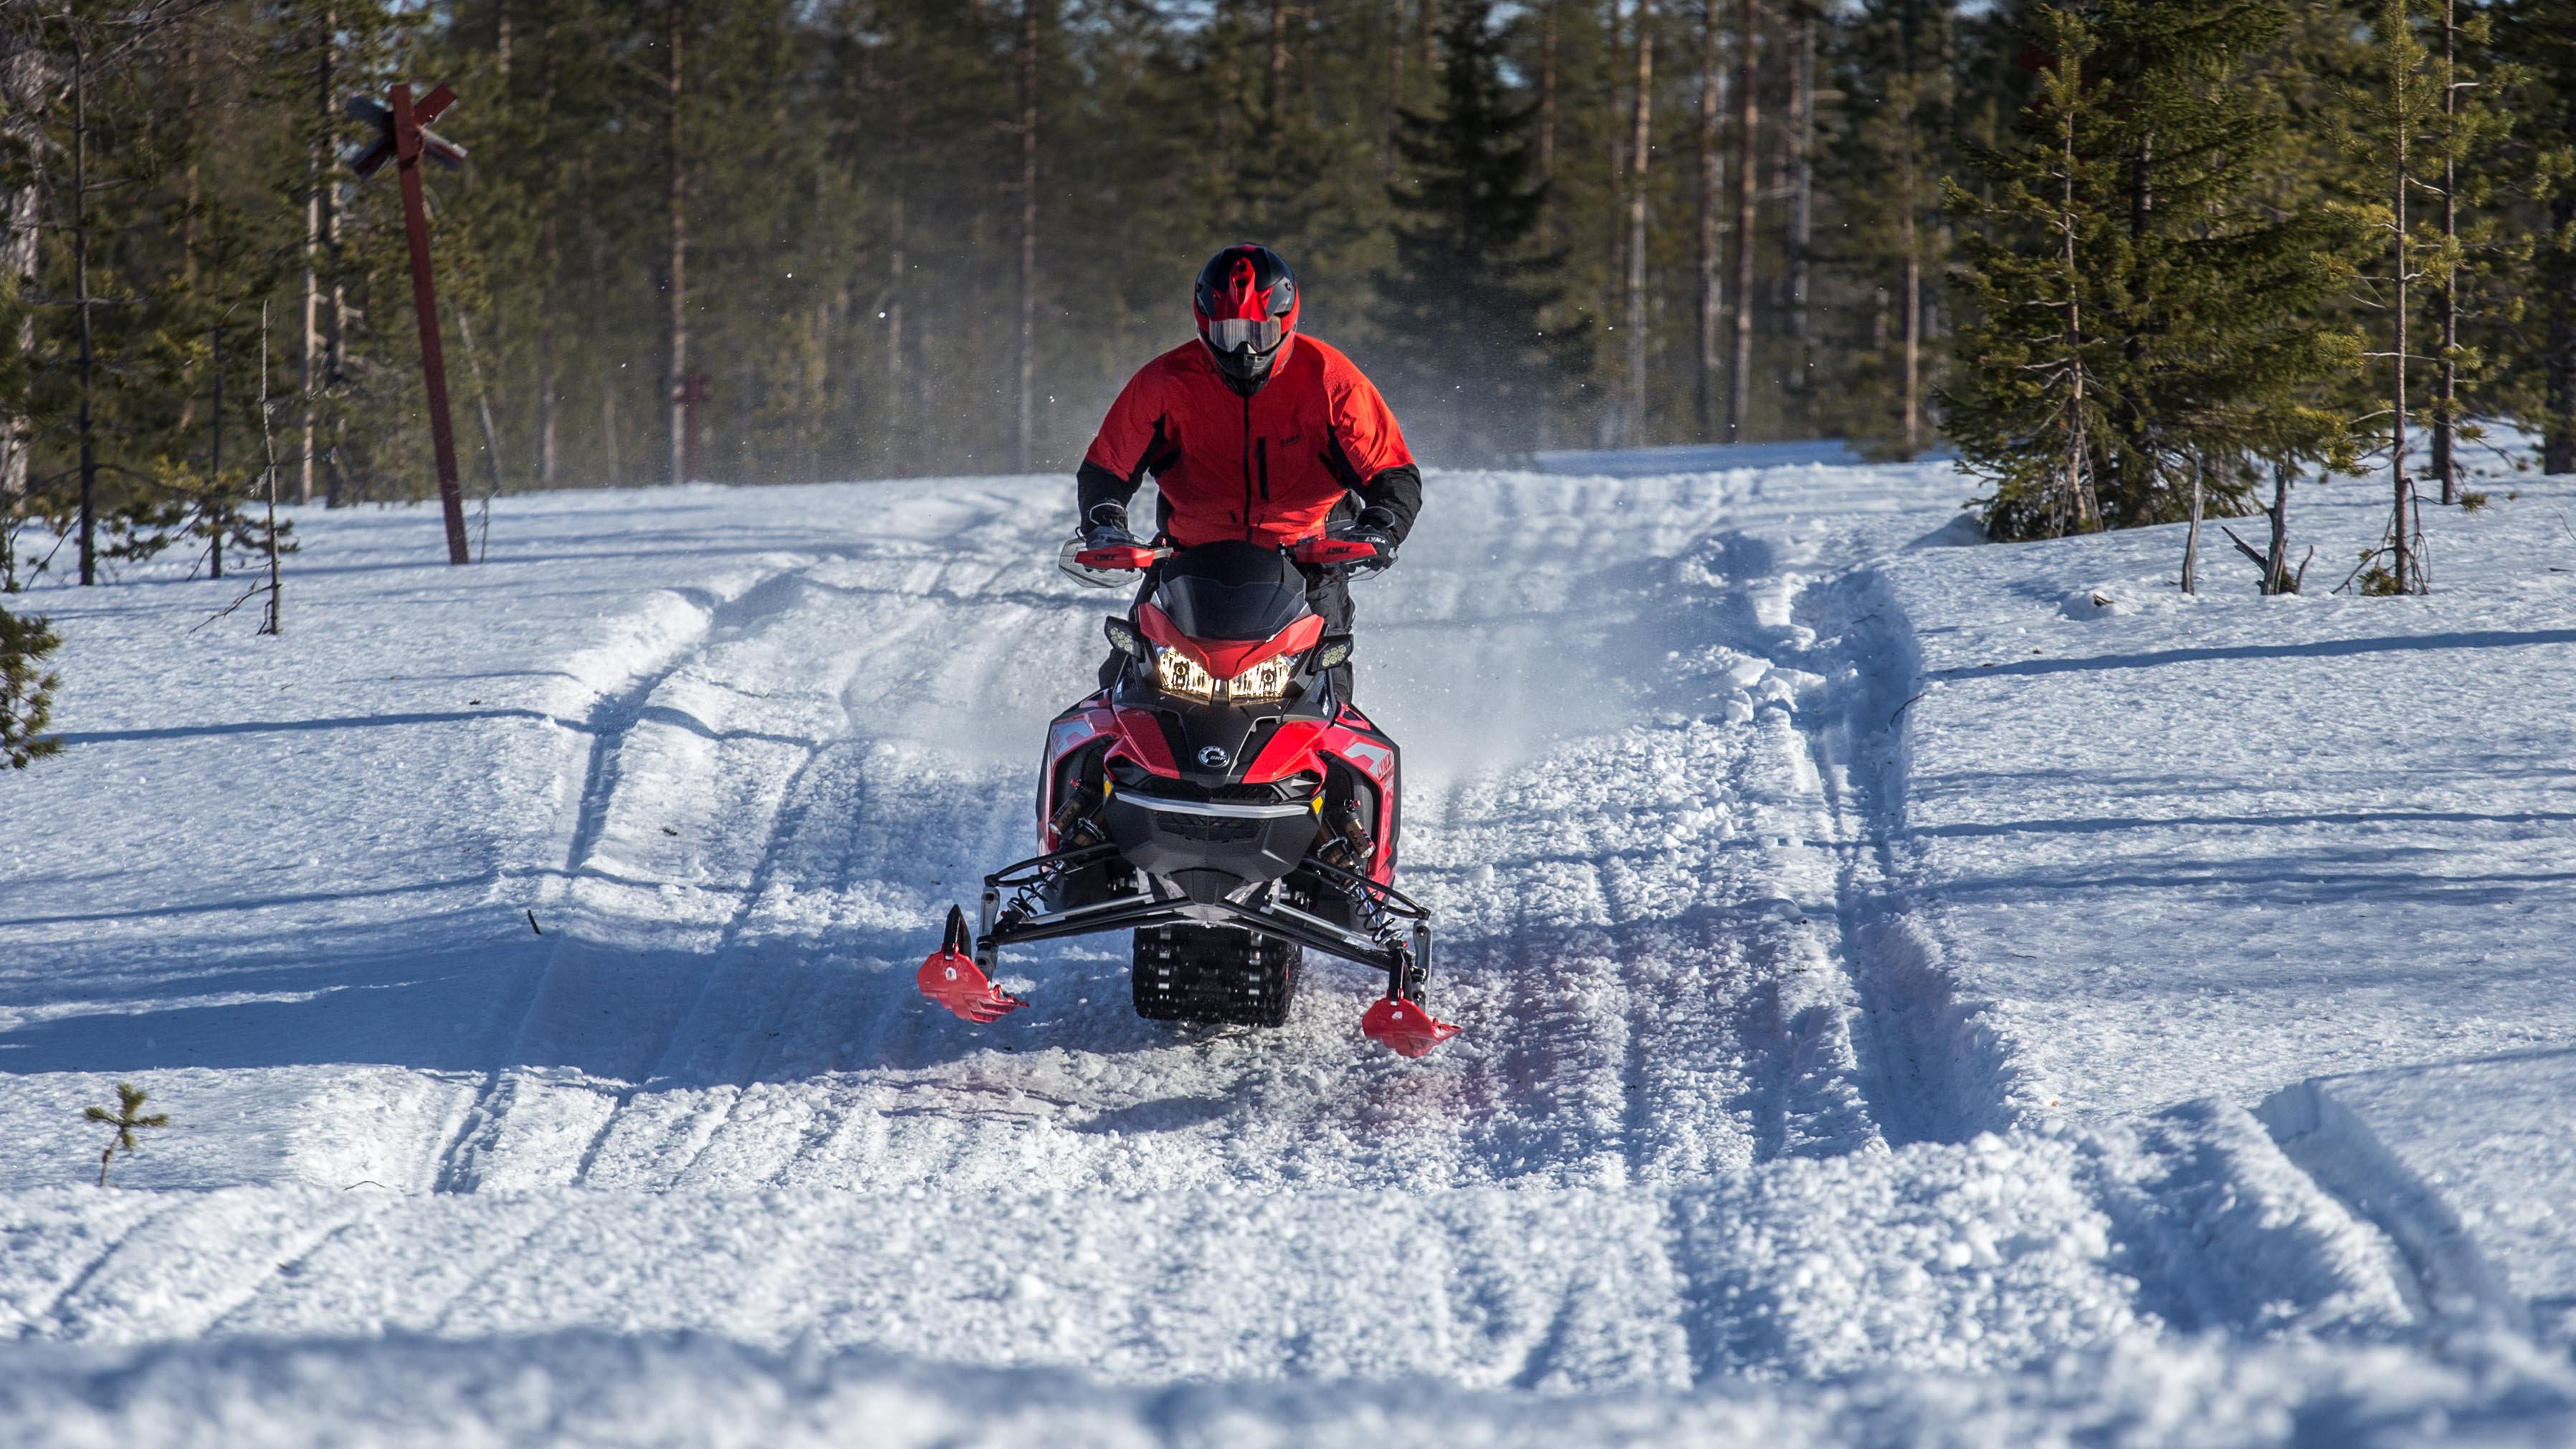 Football player Sami Hyypiä Lynx snowmobile riding on bumpy trail